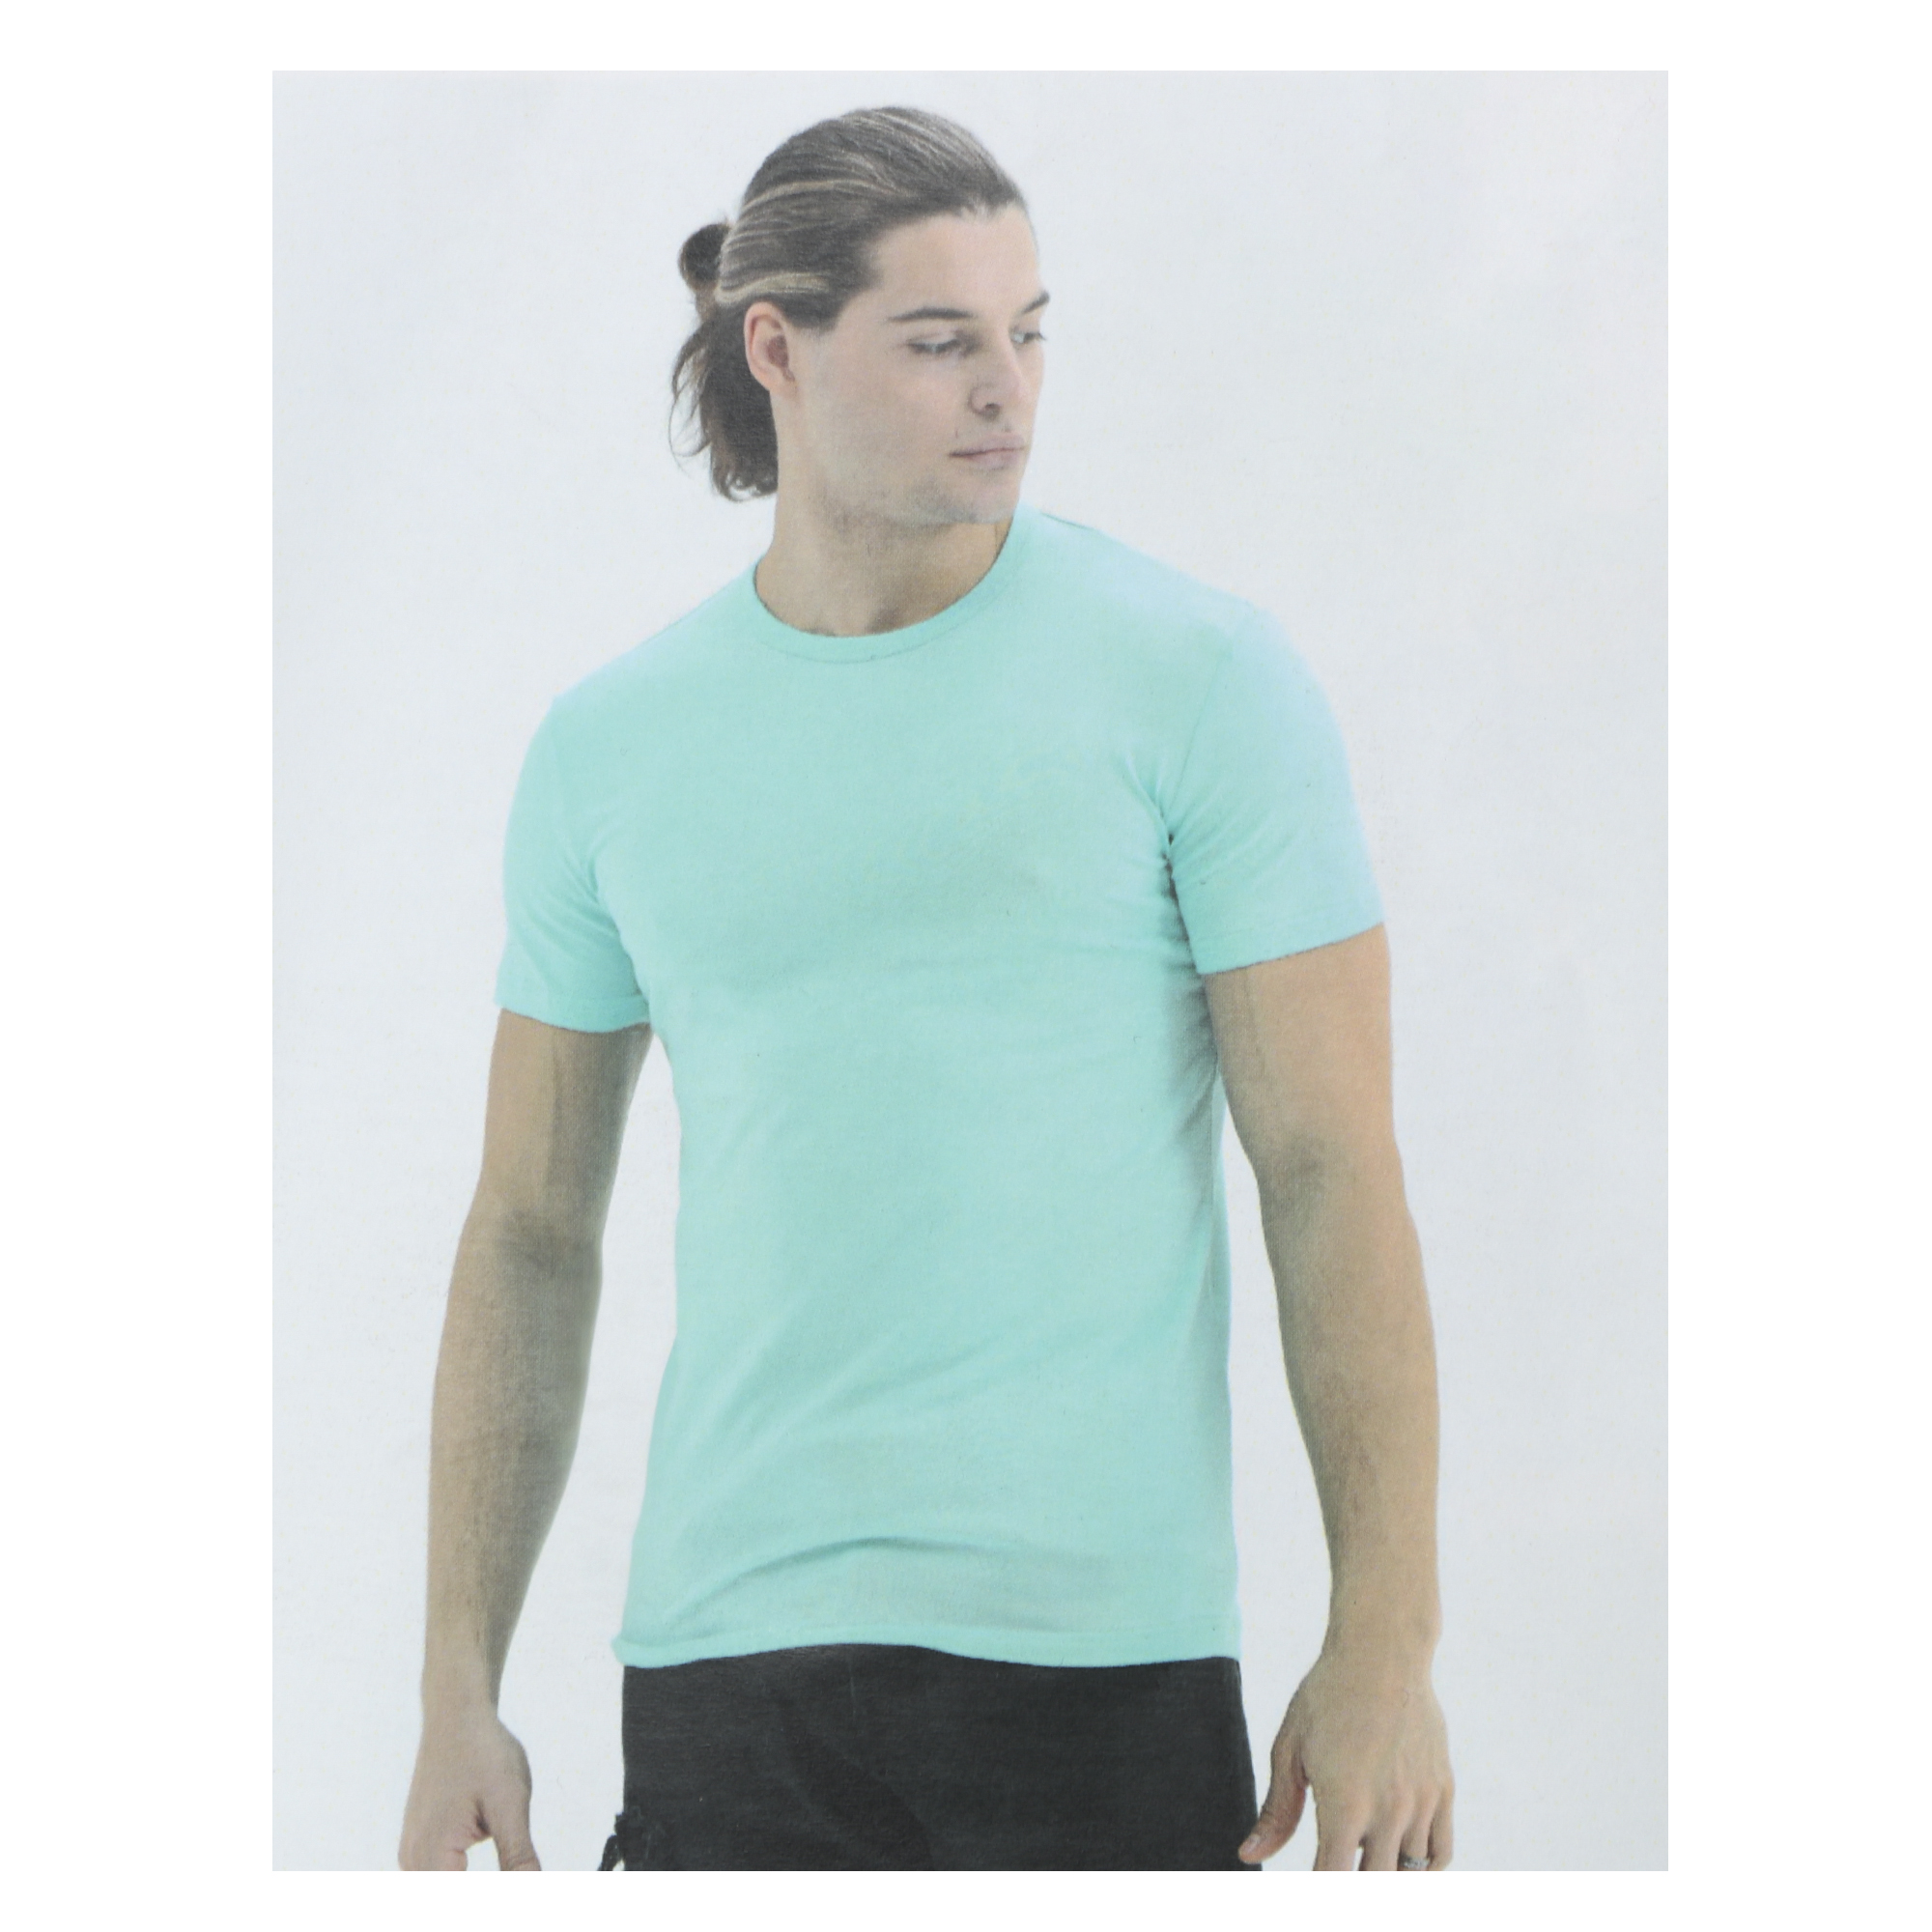 Мужская футболка Pantelemone MF-913 46 ментоловая, цвет ментоловый, размер 46 - фото 2